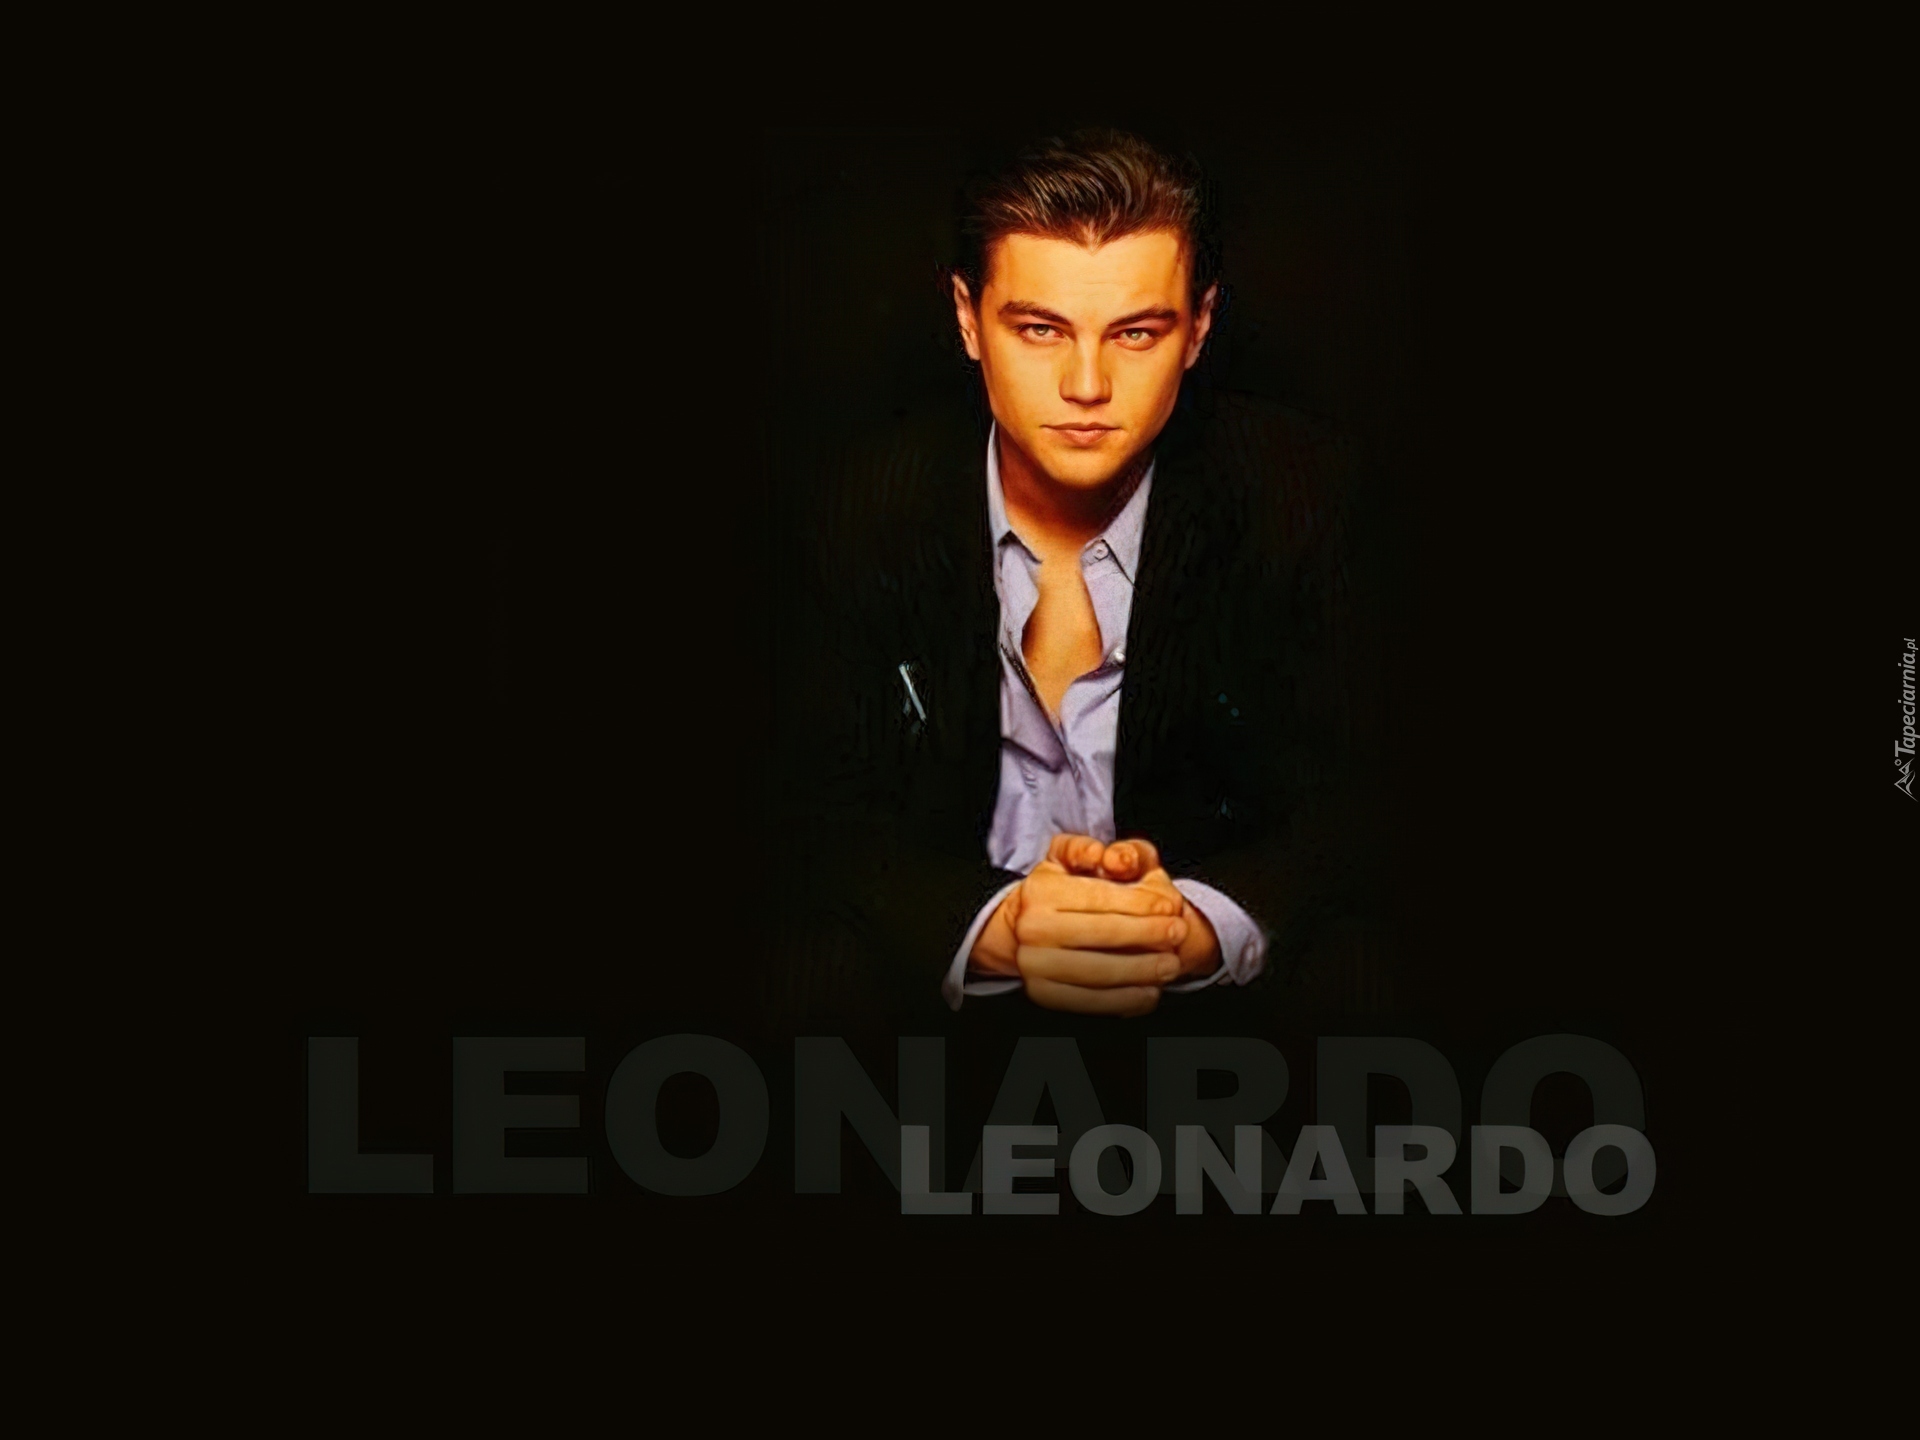 Leonardo DiCaprio,niebieska koszula